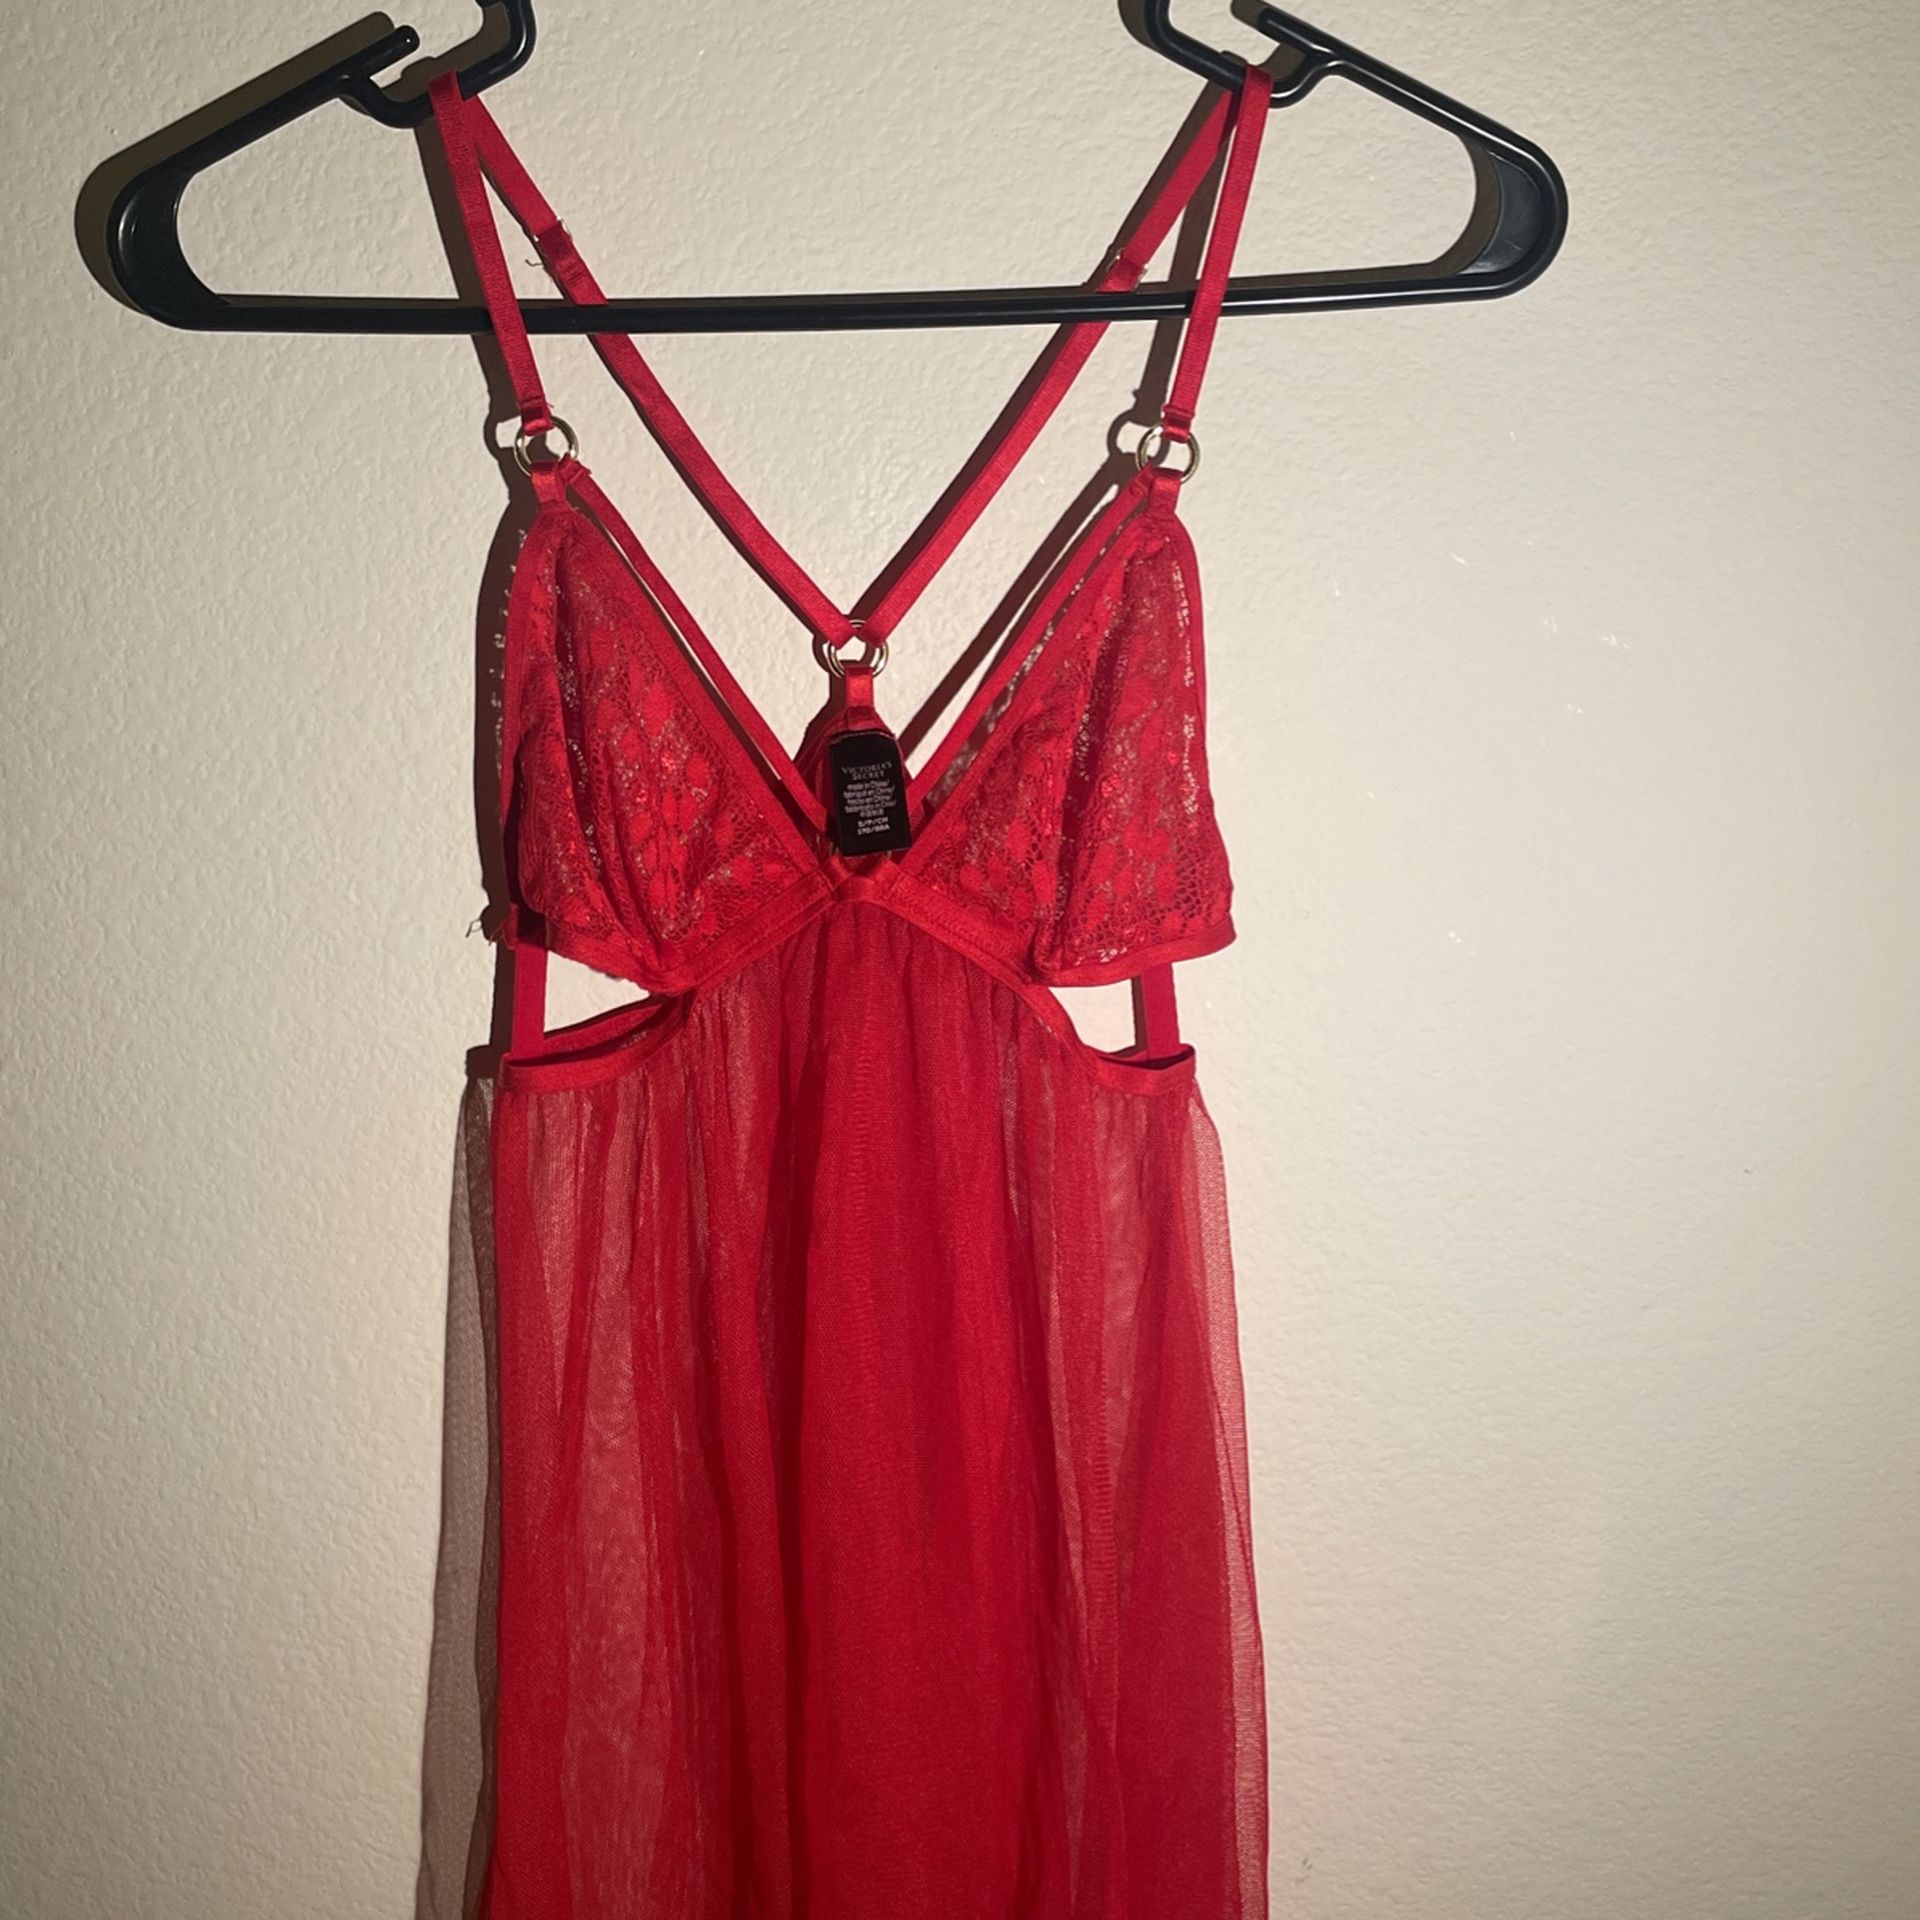 Victoria’s Secret Red Lace Baby Doll Lingerie Dress 